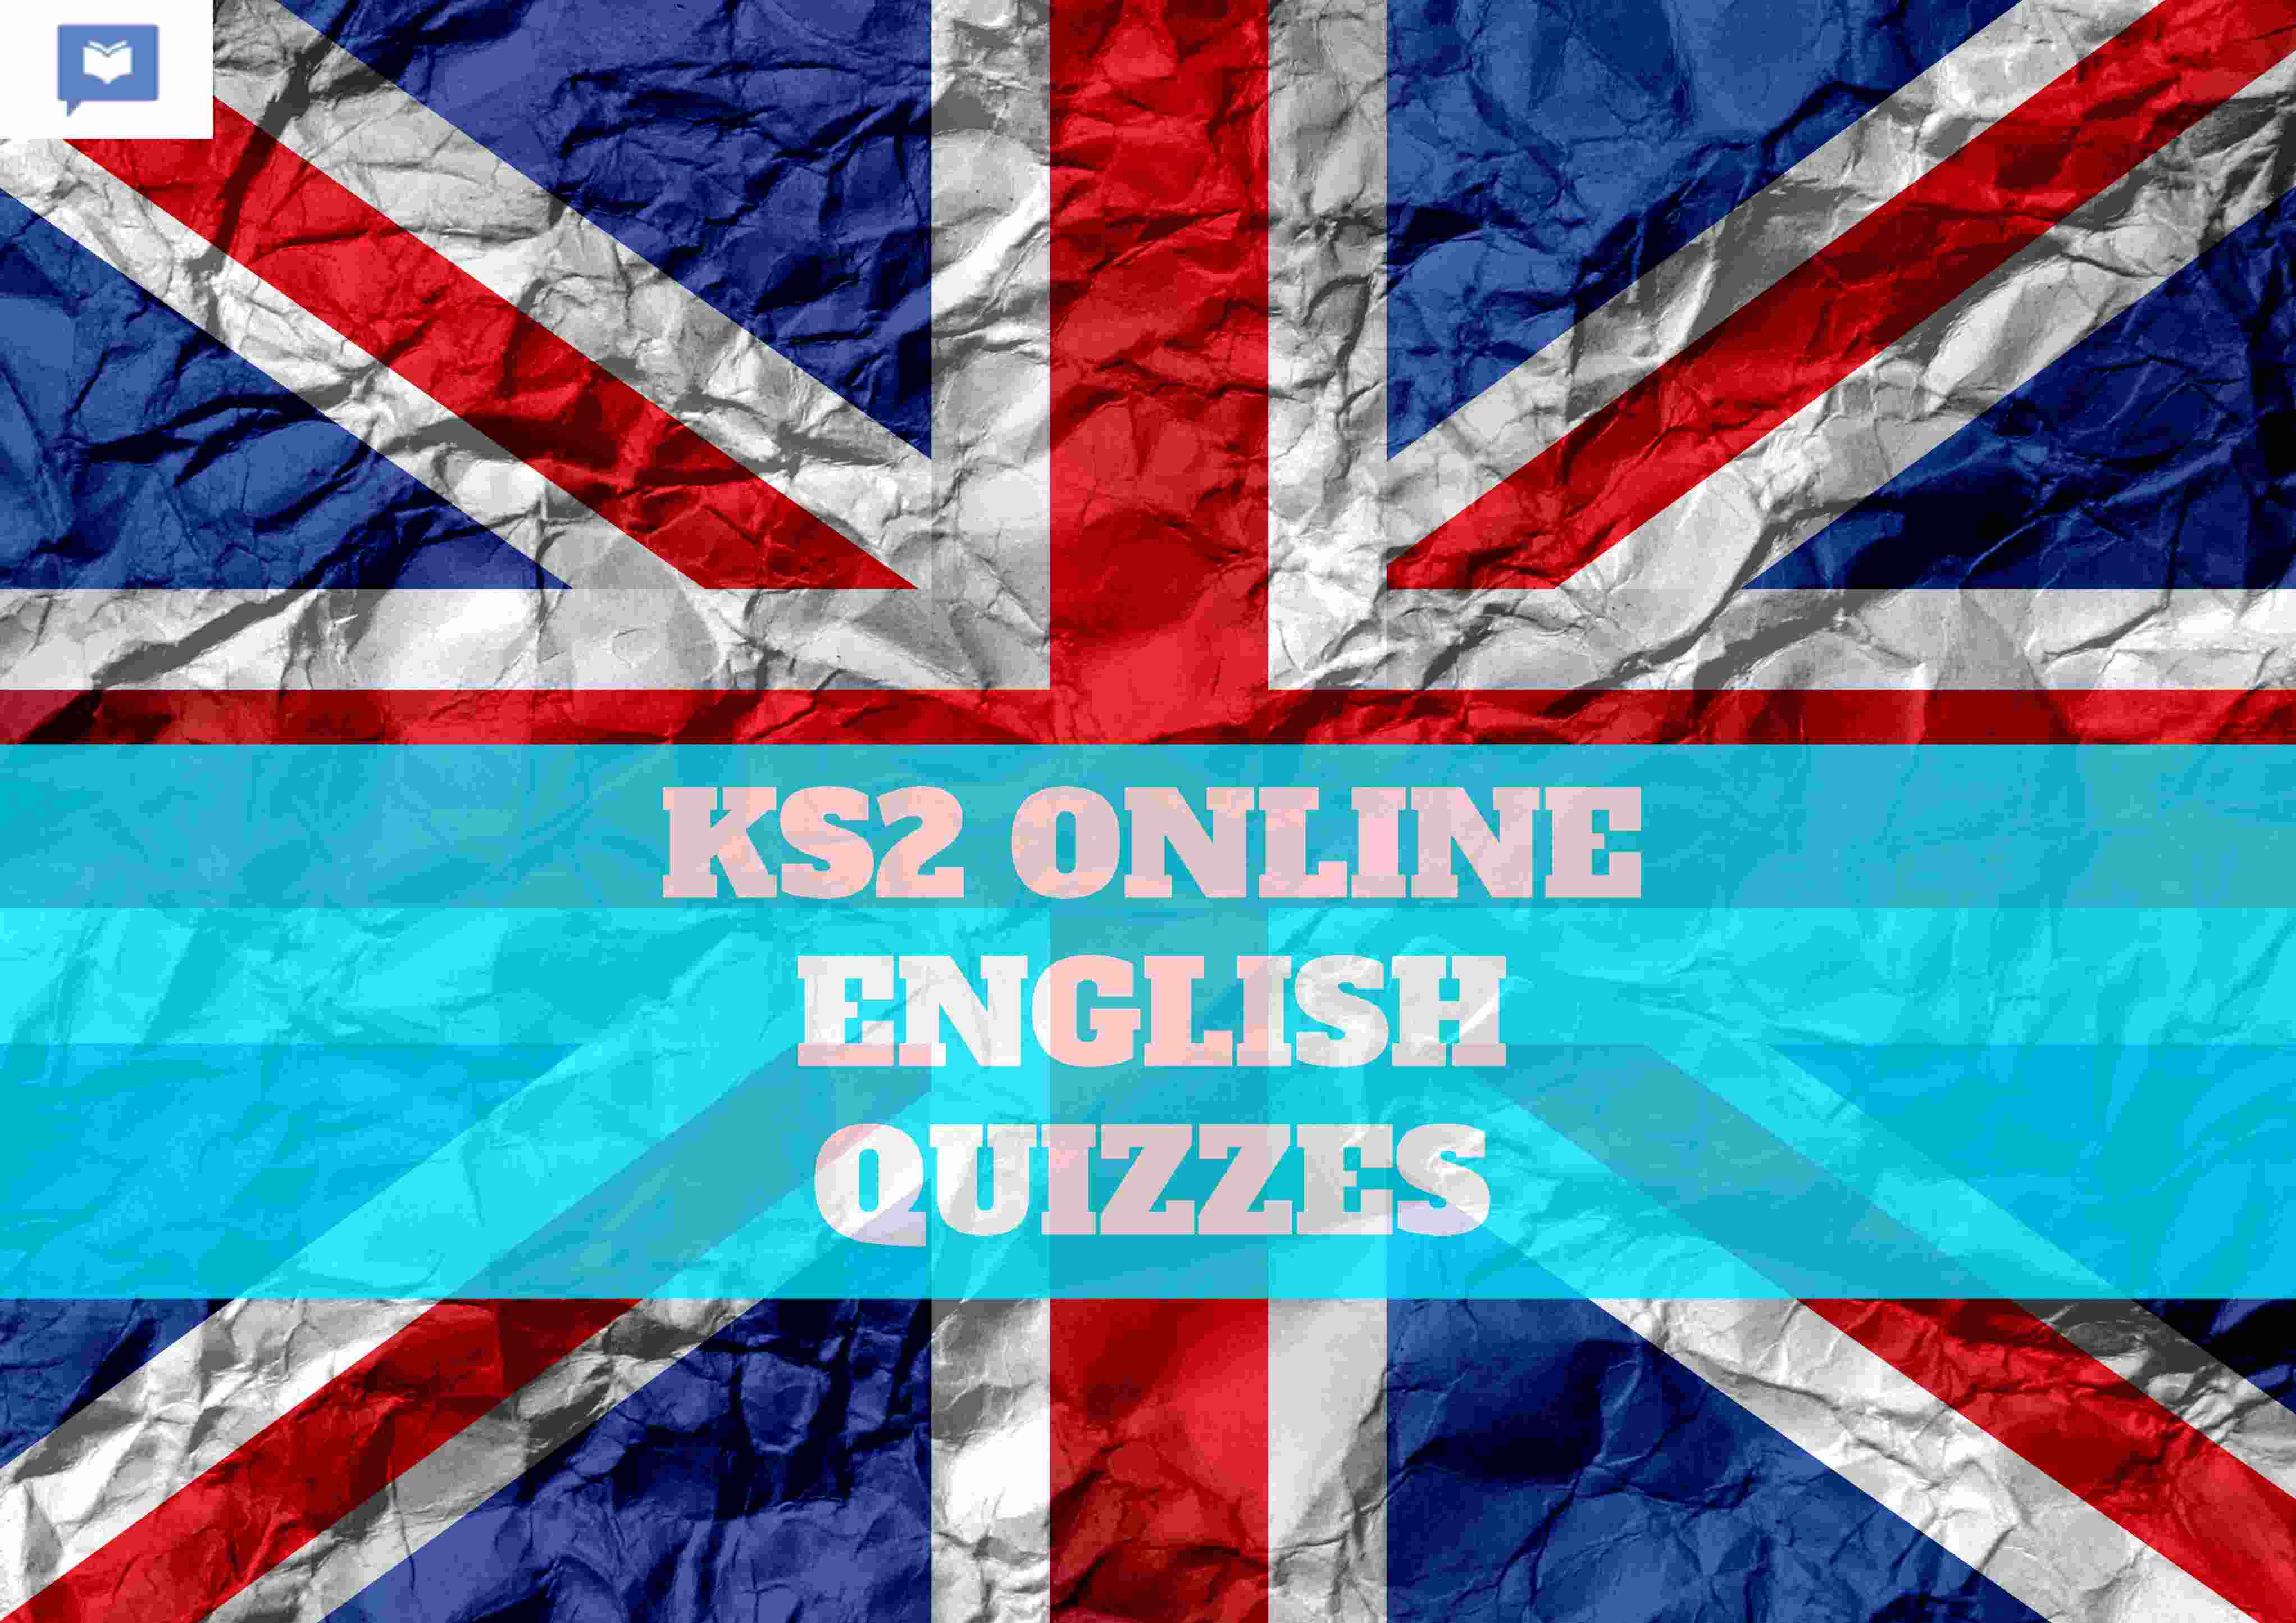 KS2 (key stage 2) Online English Quizzes